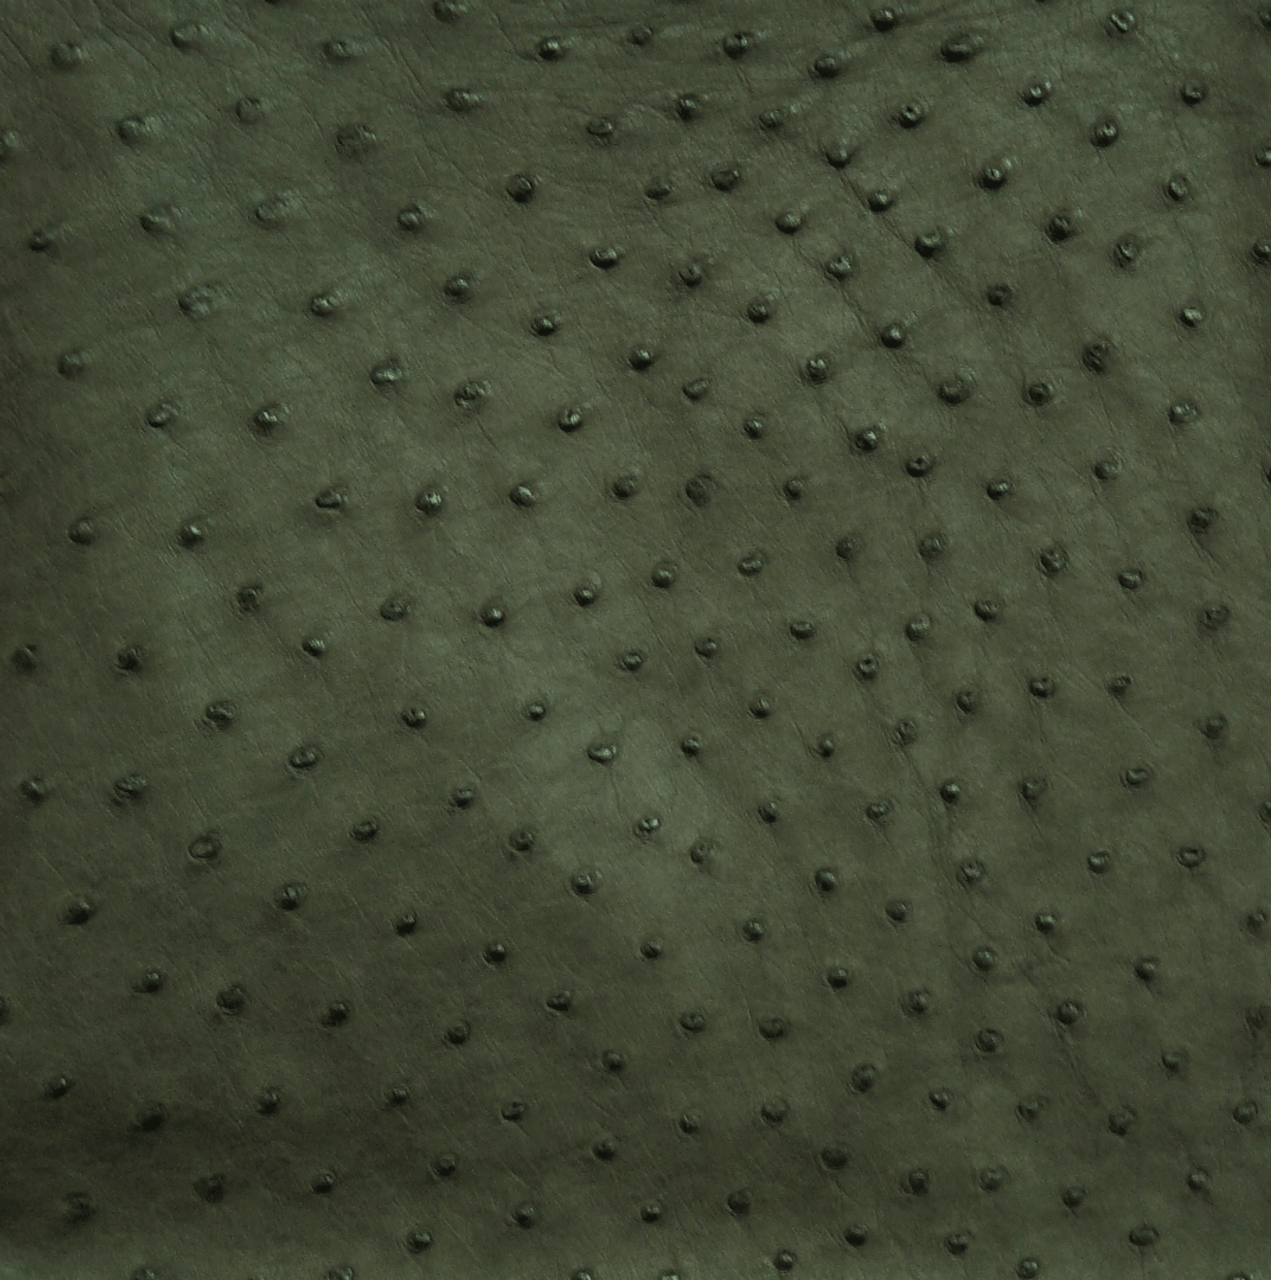 Ostrich Skin Leather - ANTHRACITE SF - 18.7292 sq ft - Grade 3 - OSTRICH  MARKET